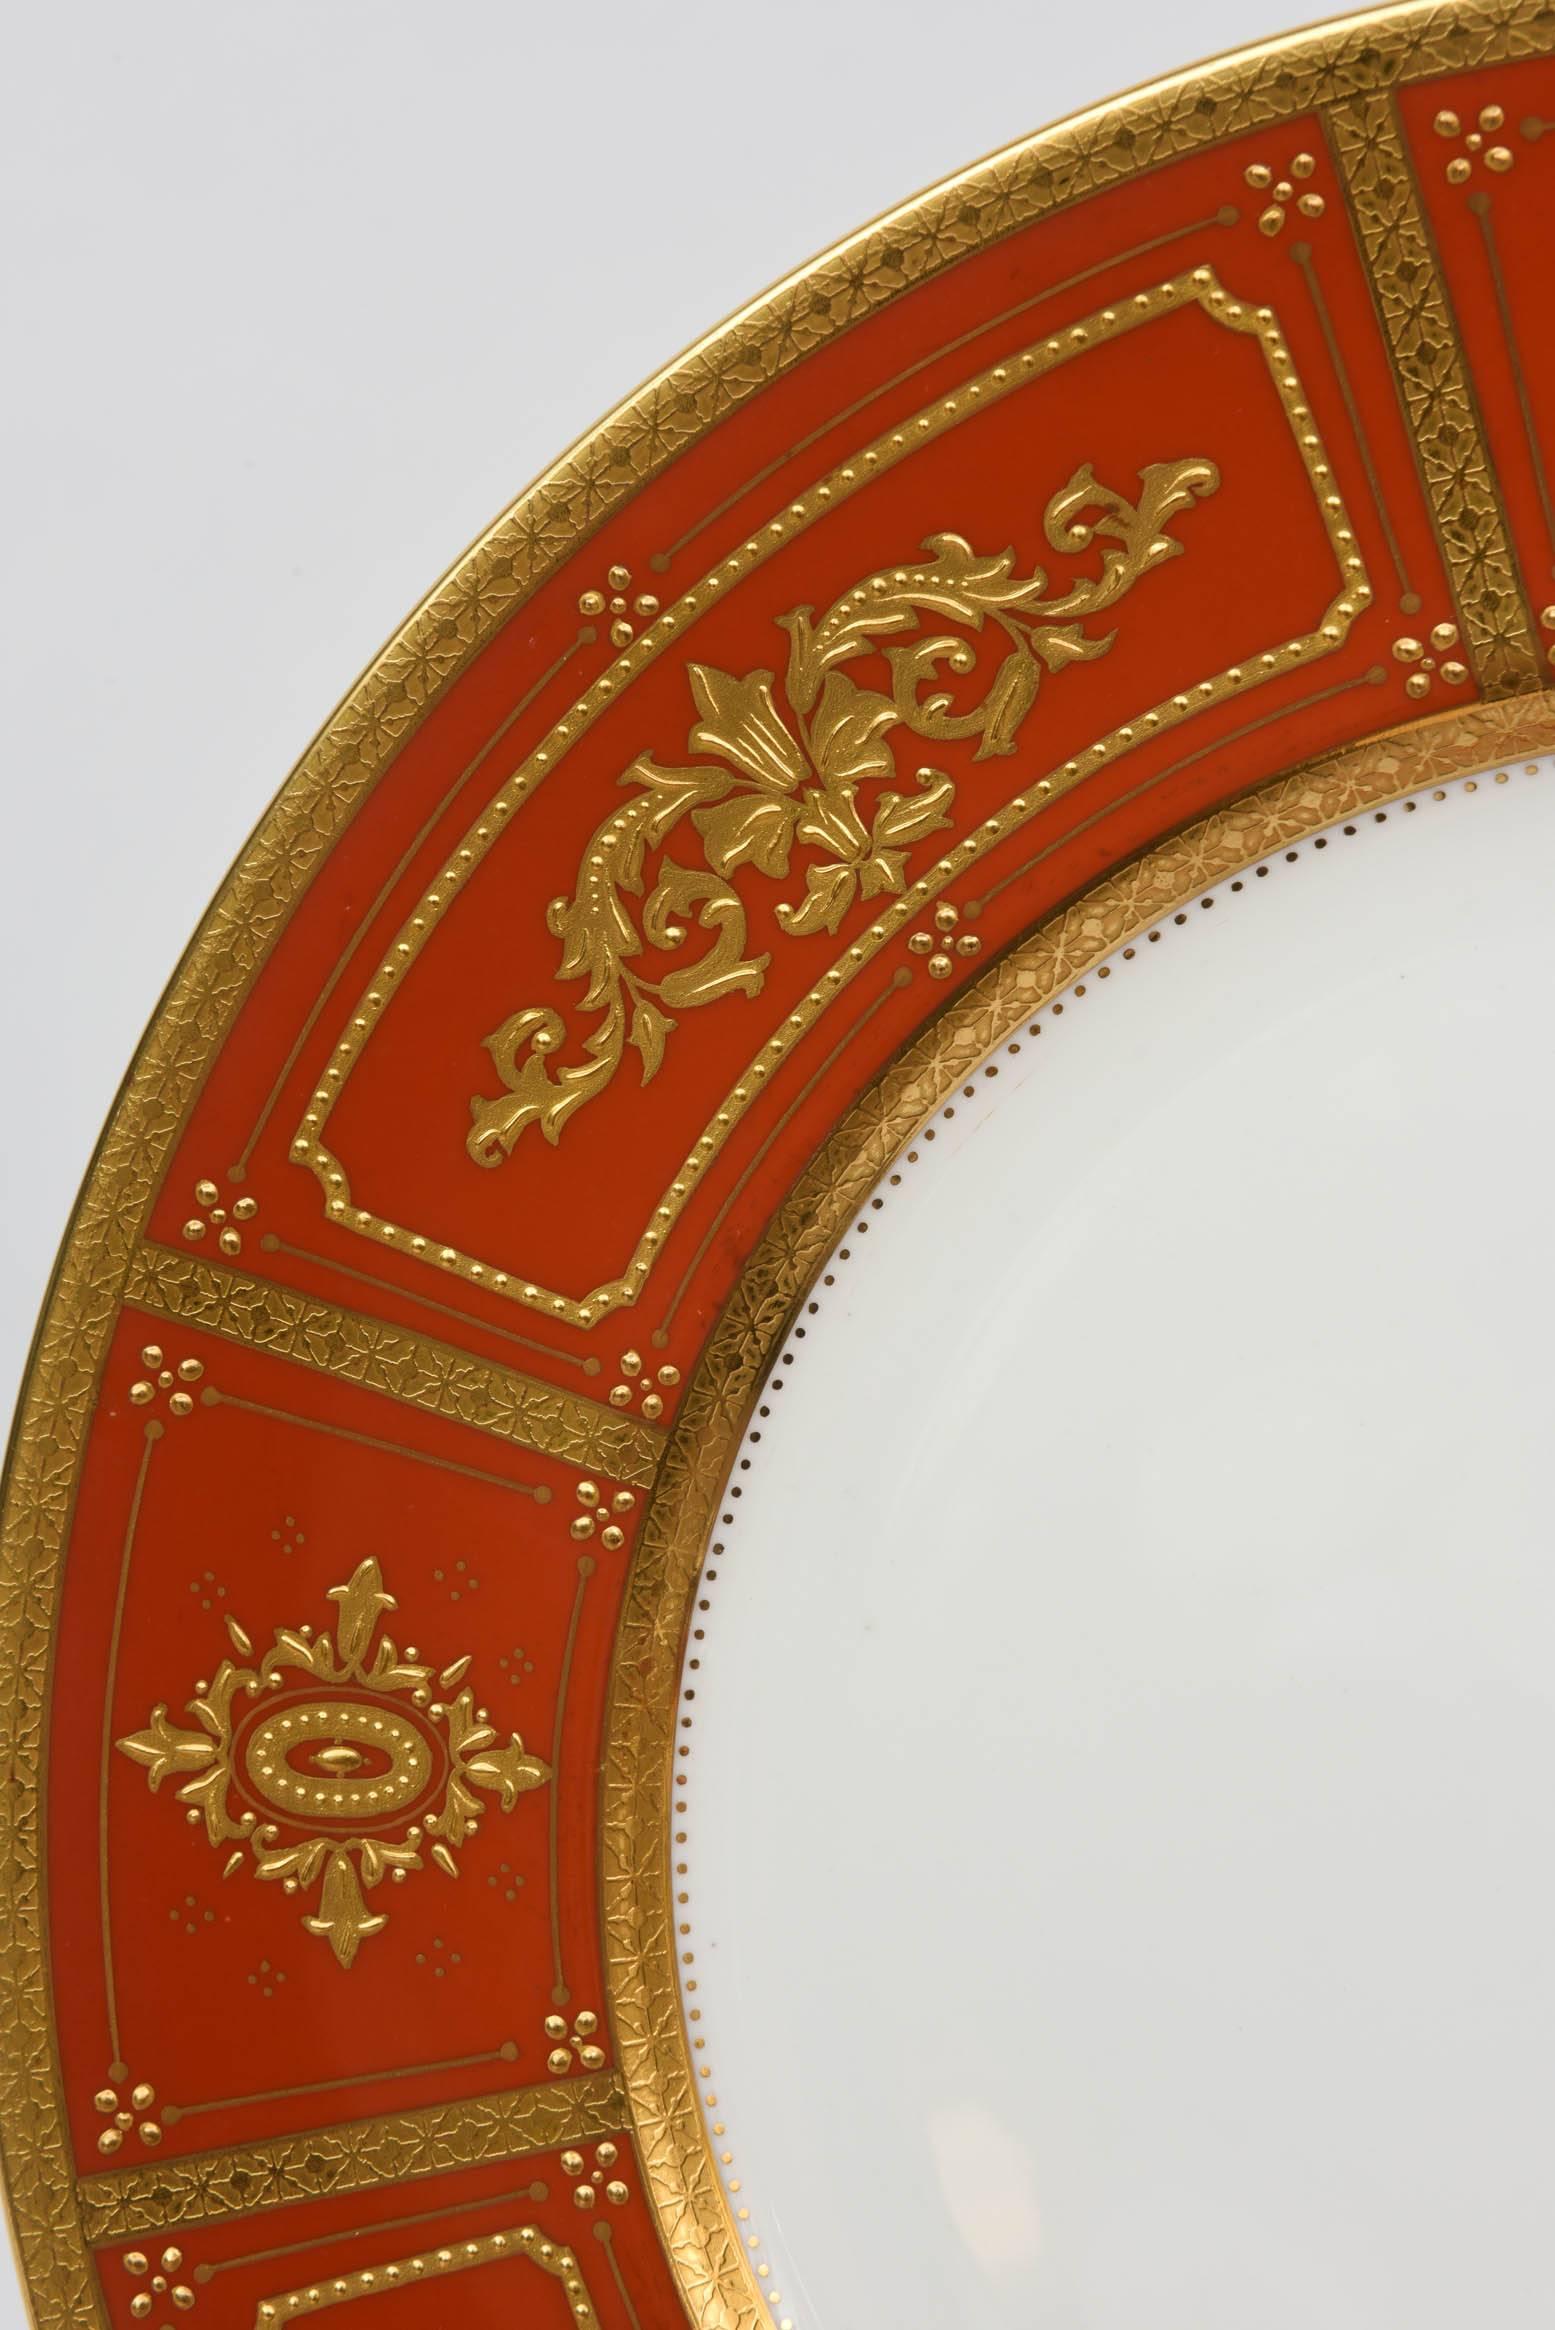 tiffany plates antique